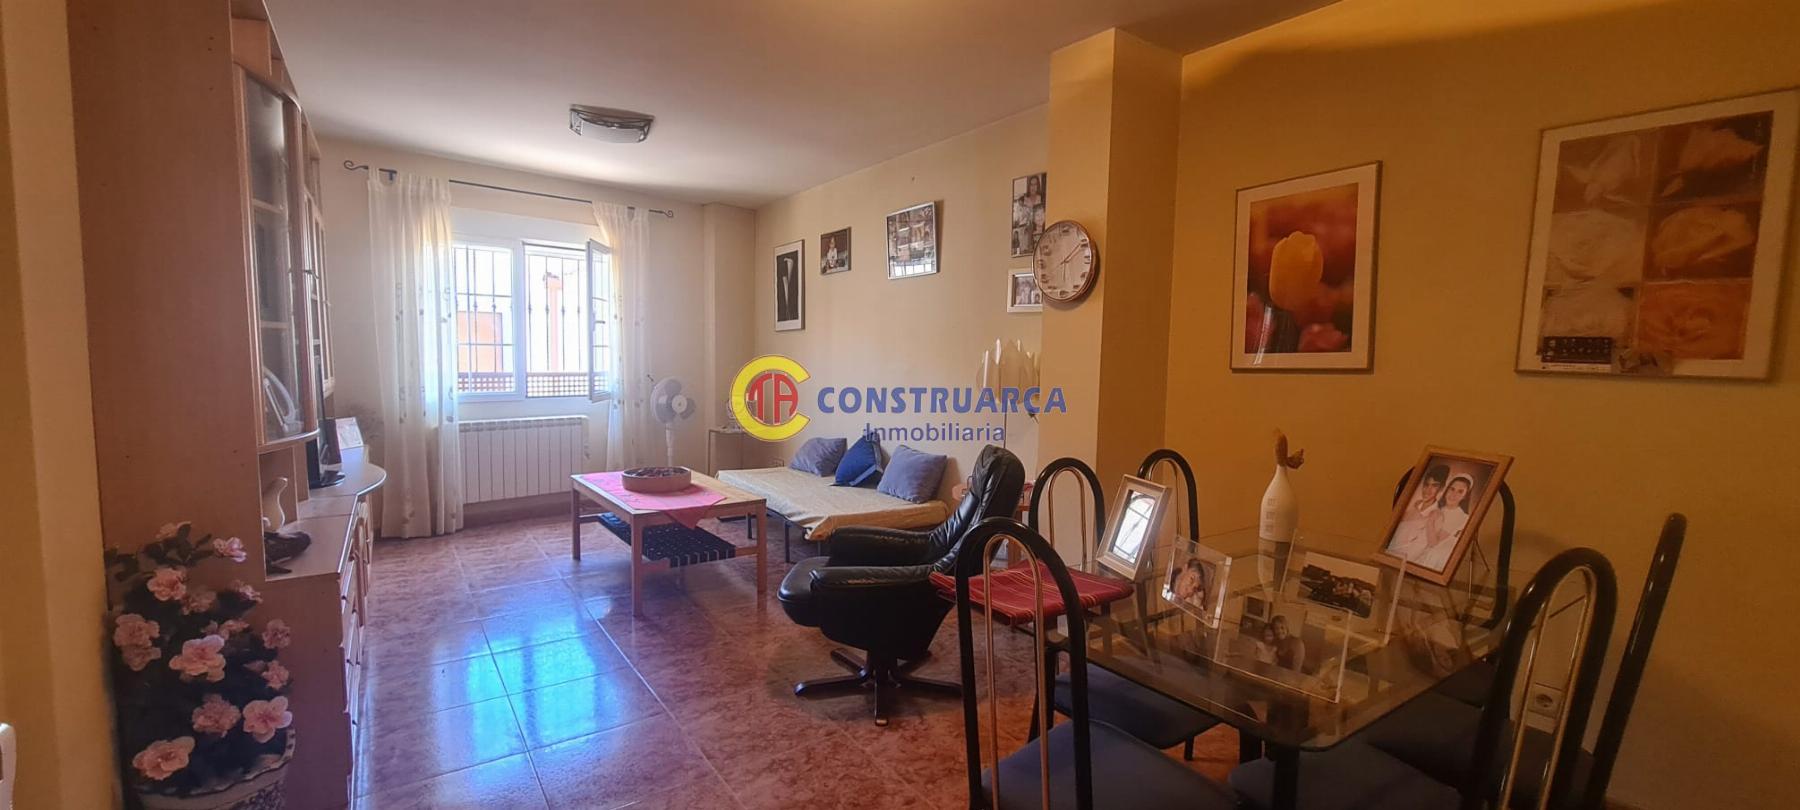 For sale of flat in San Román de los Montes